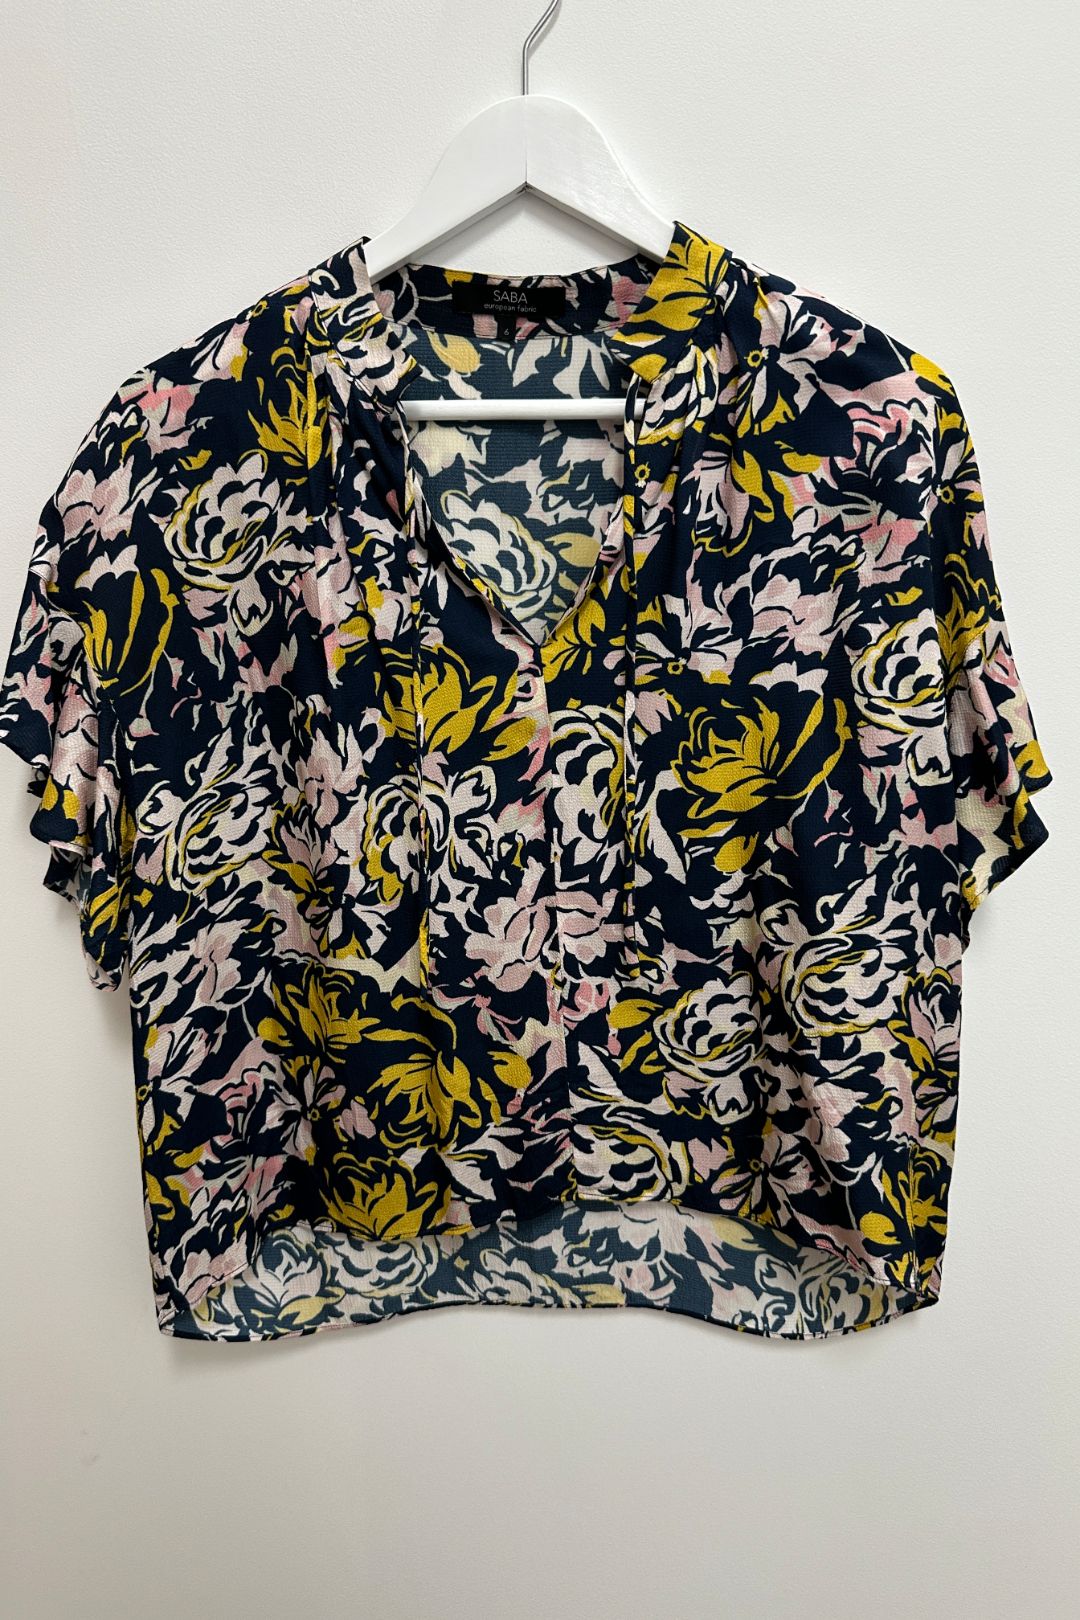 Saba Floral Short Sleeve European Shirt